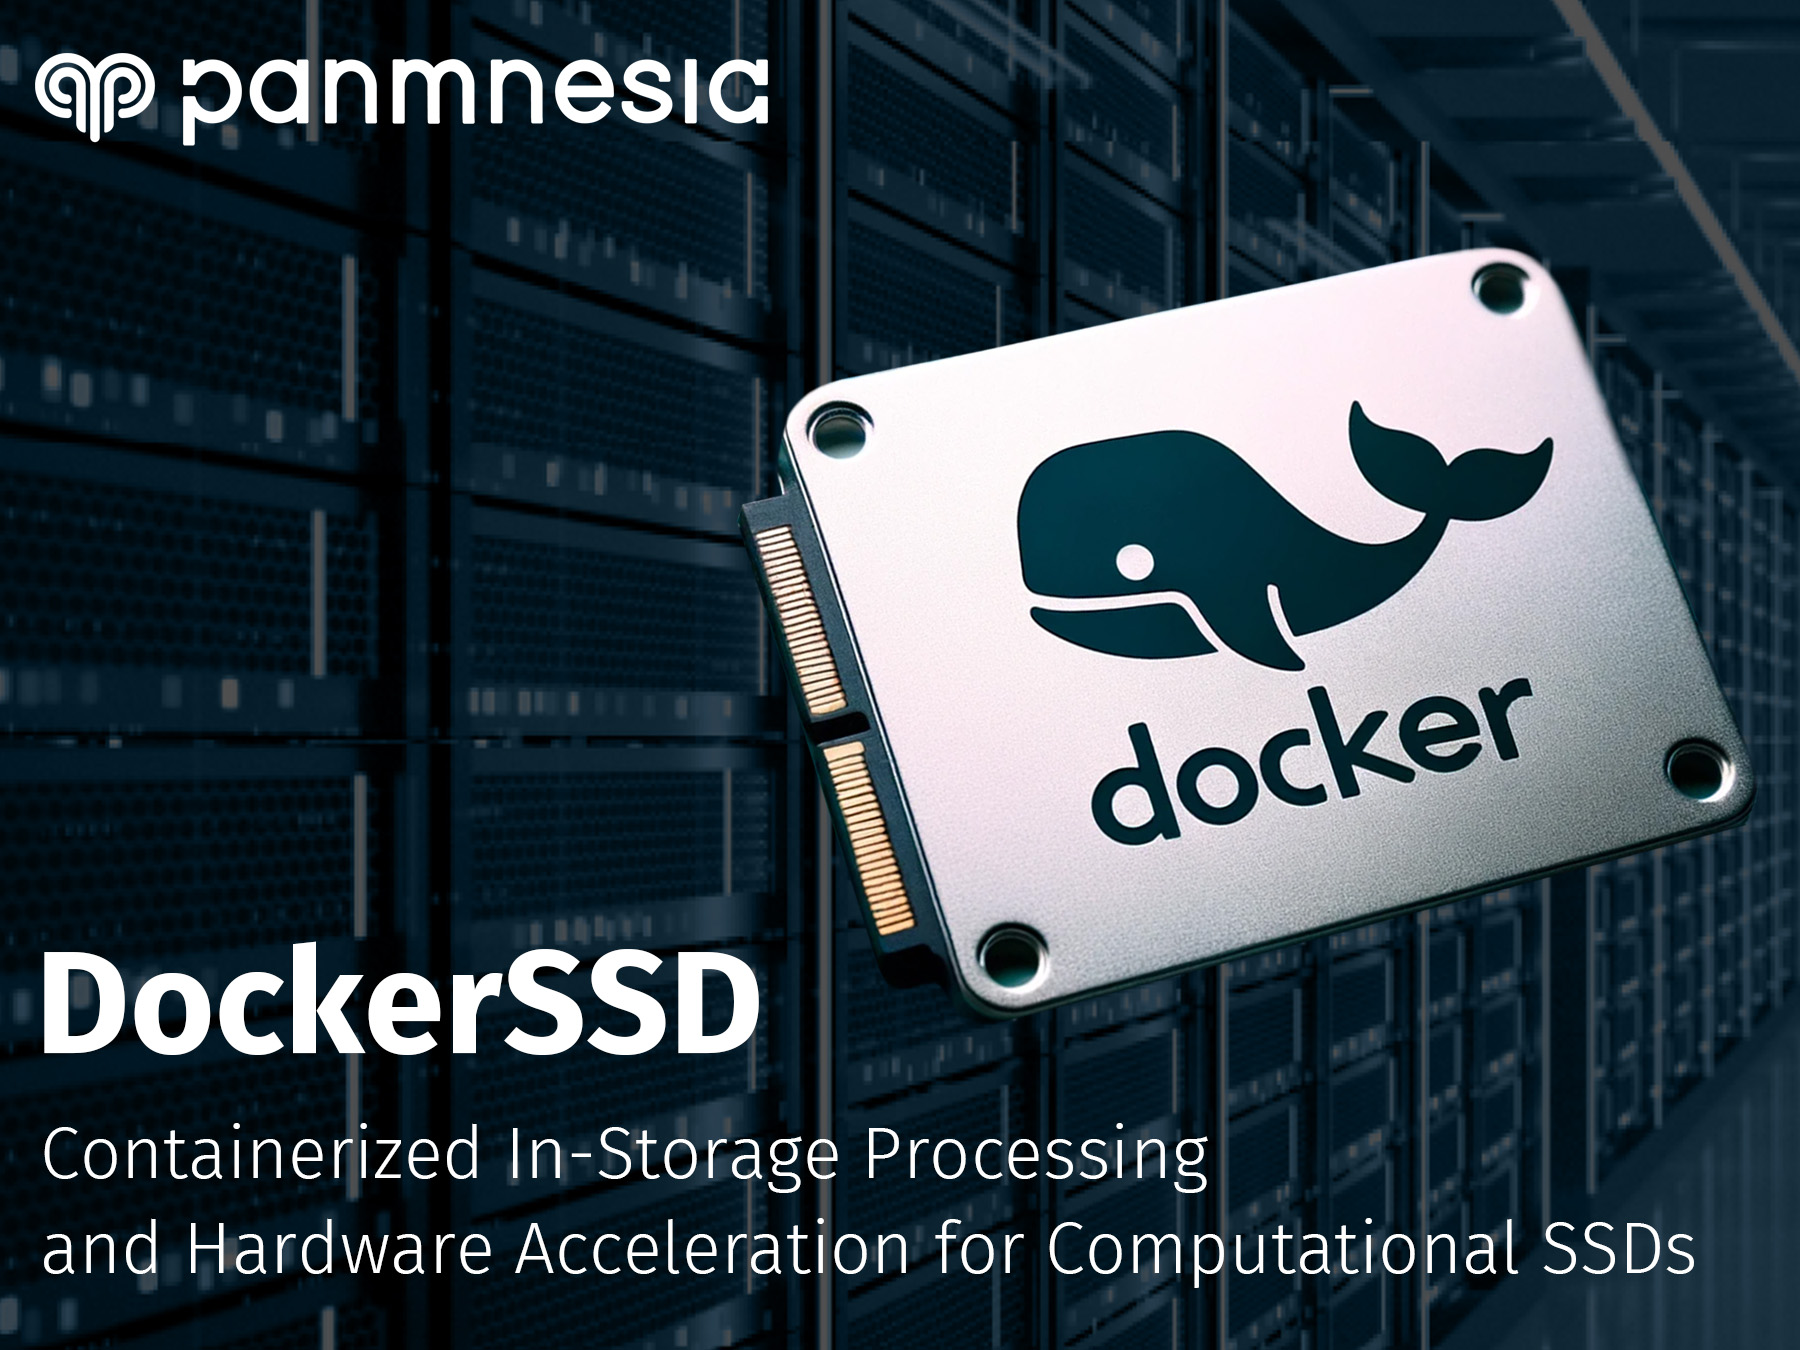 DockerSSD - Panmnesia's Docker-centric Near Data Processing Technology